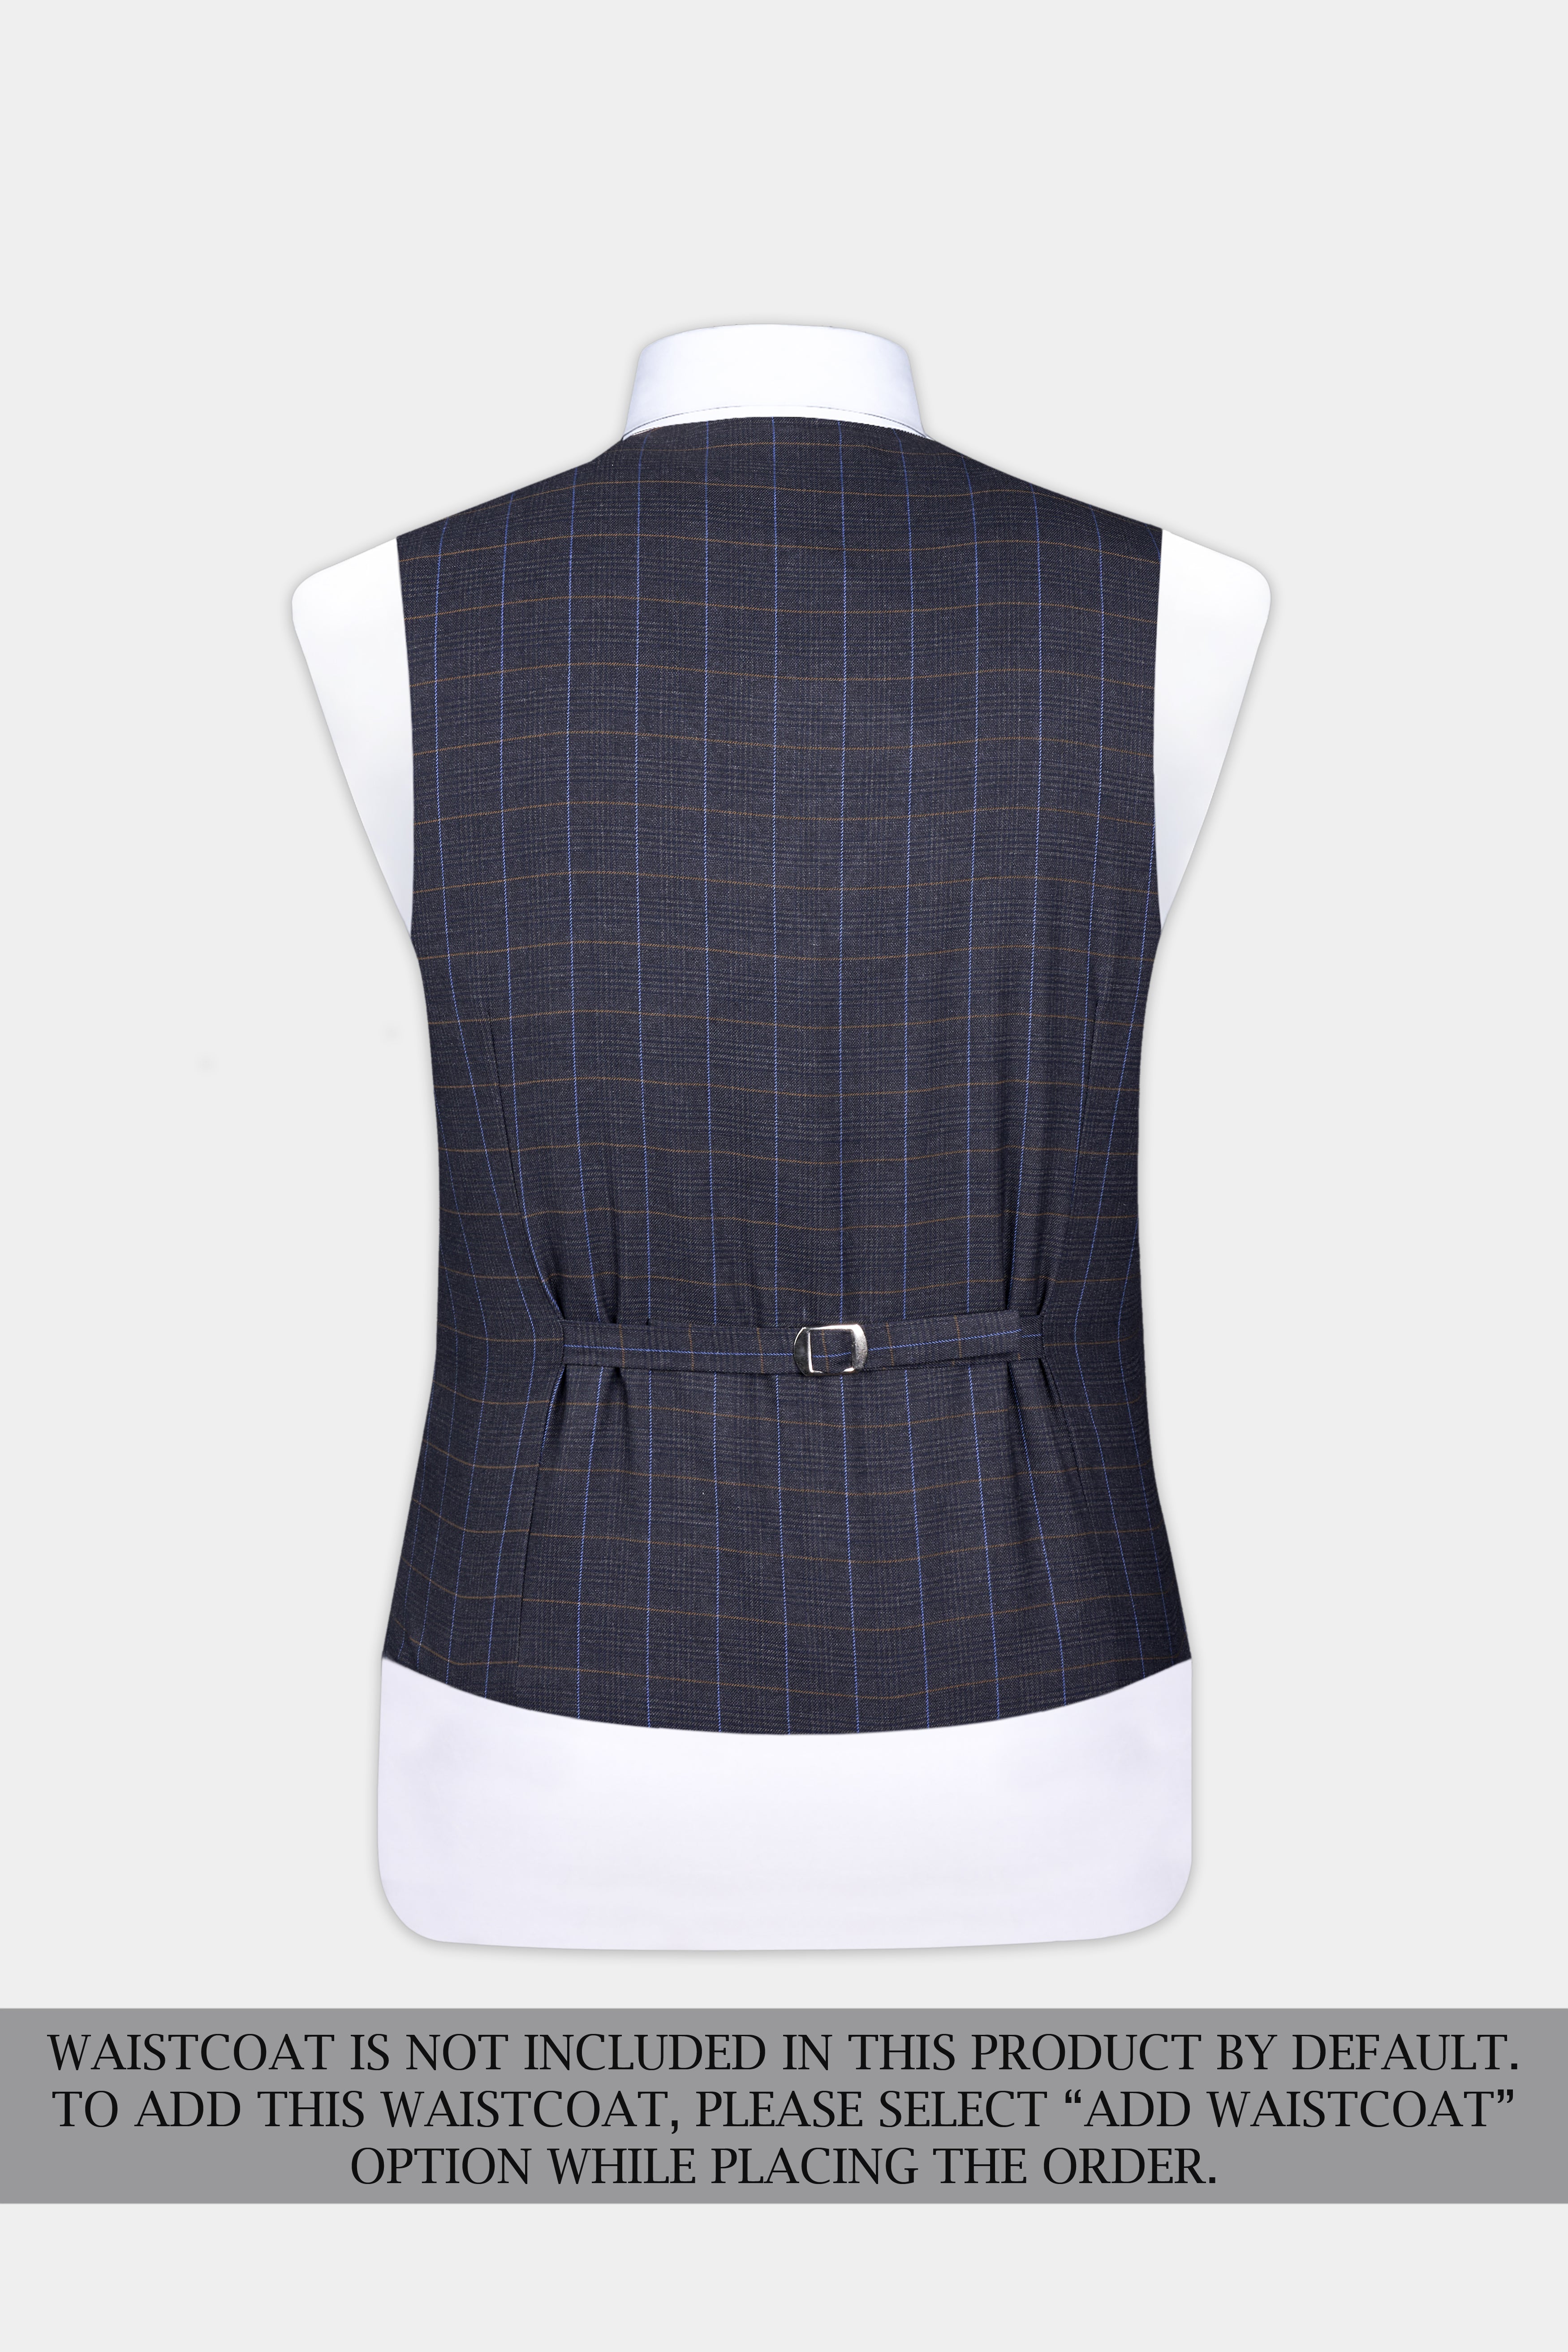 Iridium Dark Gray Windowpane Double Breaste Suit